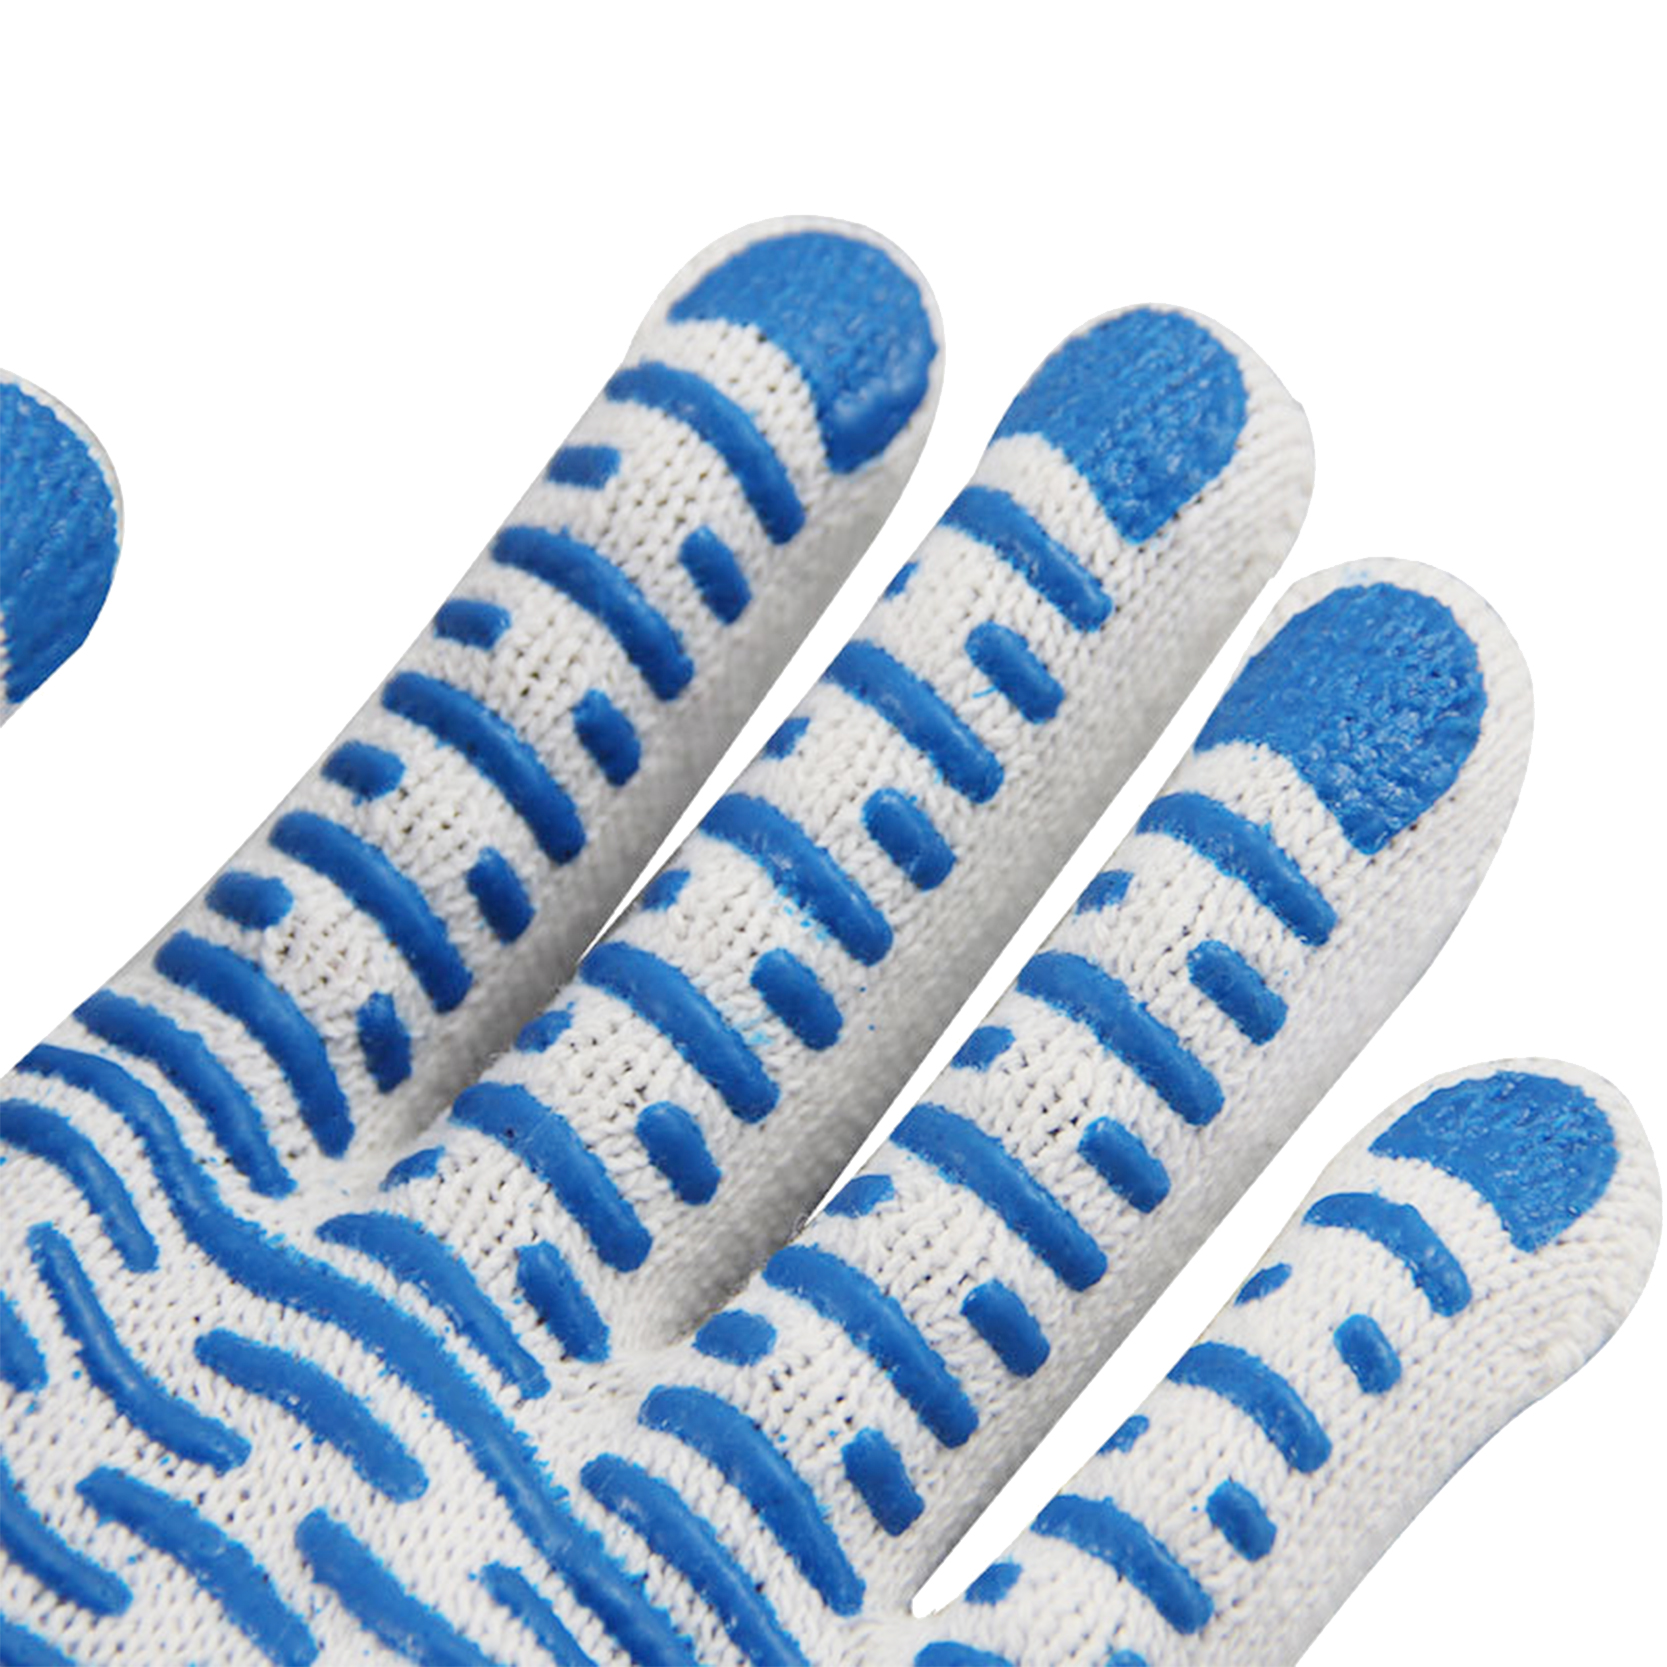 Pvc Dotted Natural White Cotton Glove Cotton String Knit Glove (၄)ခု၊